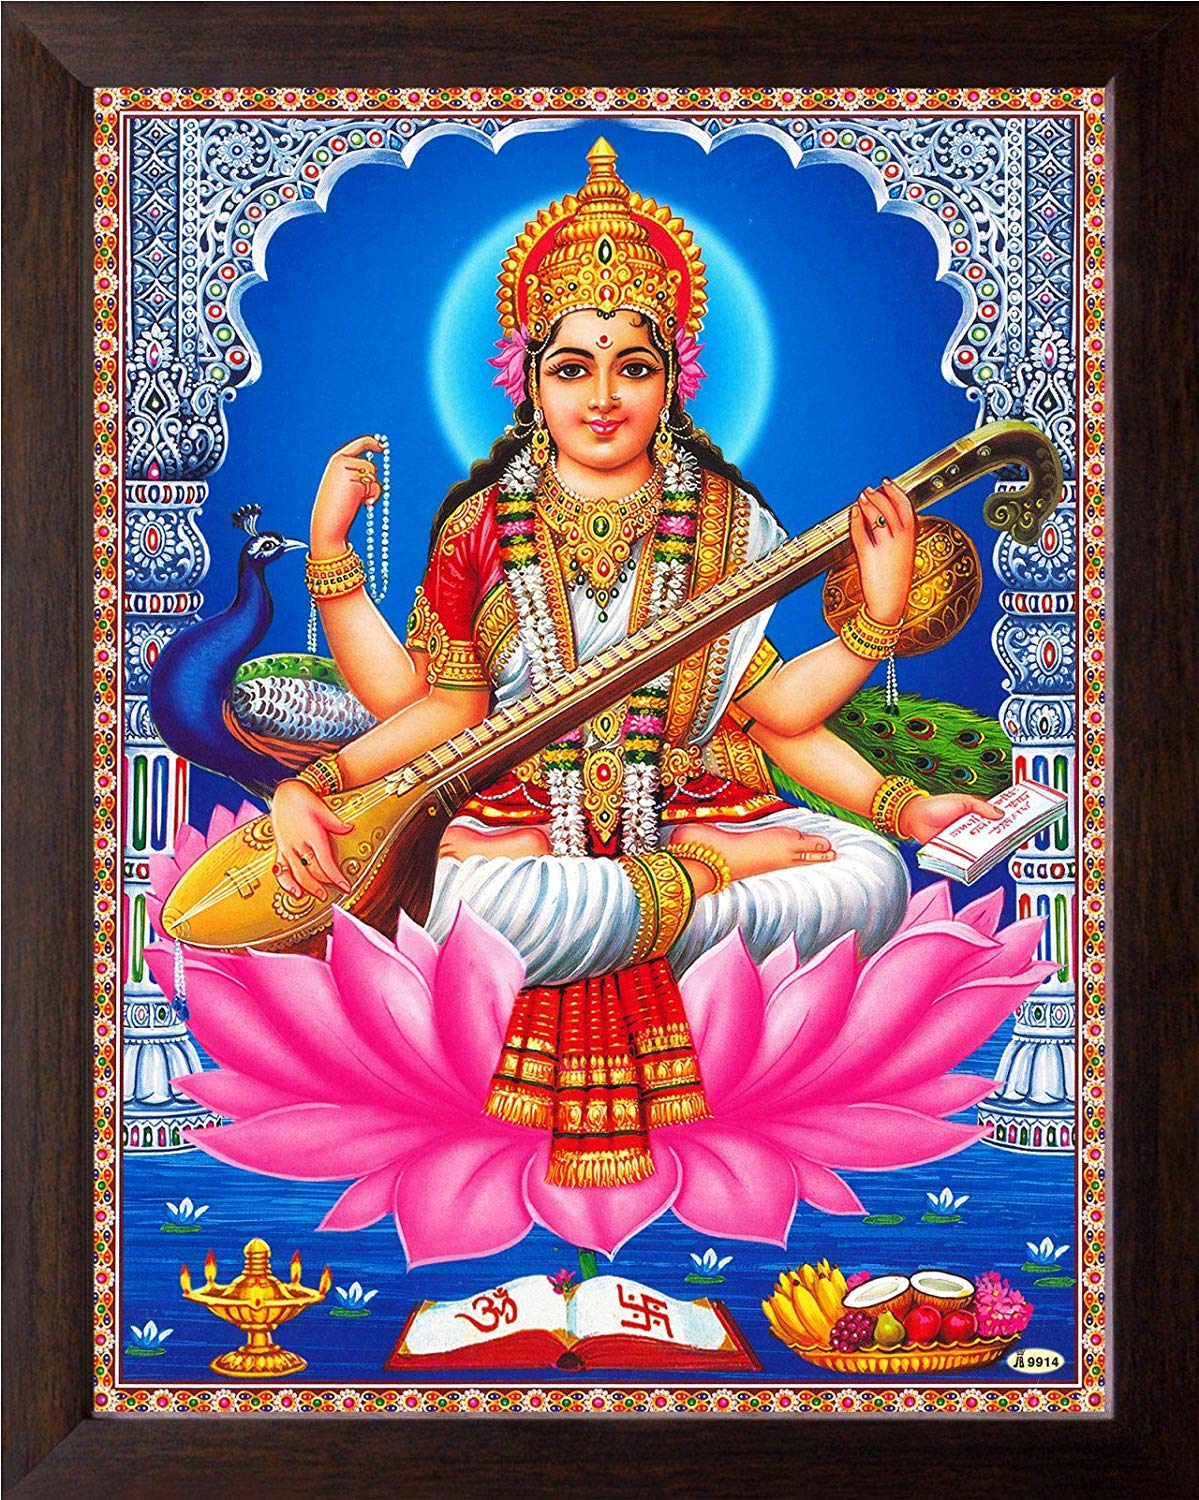 Saraswathi Devi Images Hd, wallpaper, background picture, wallpaper downloa...